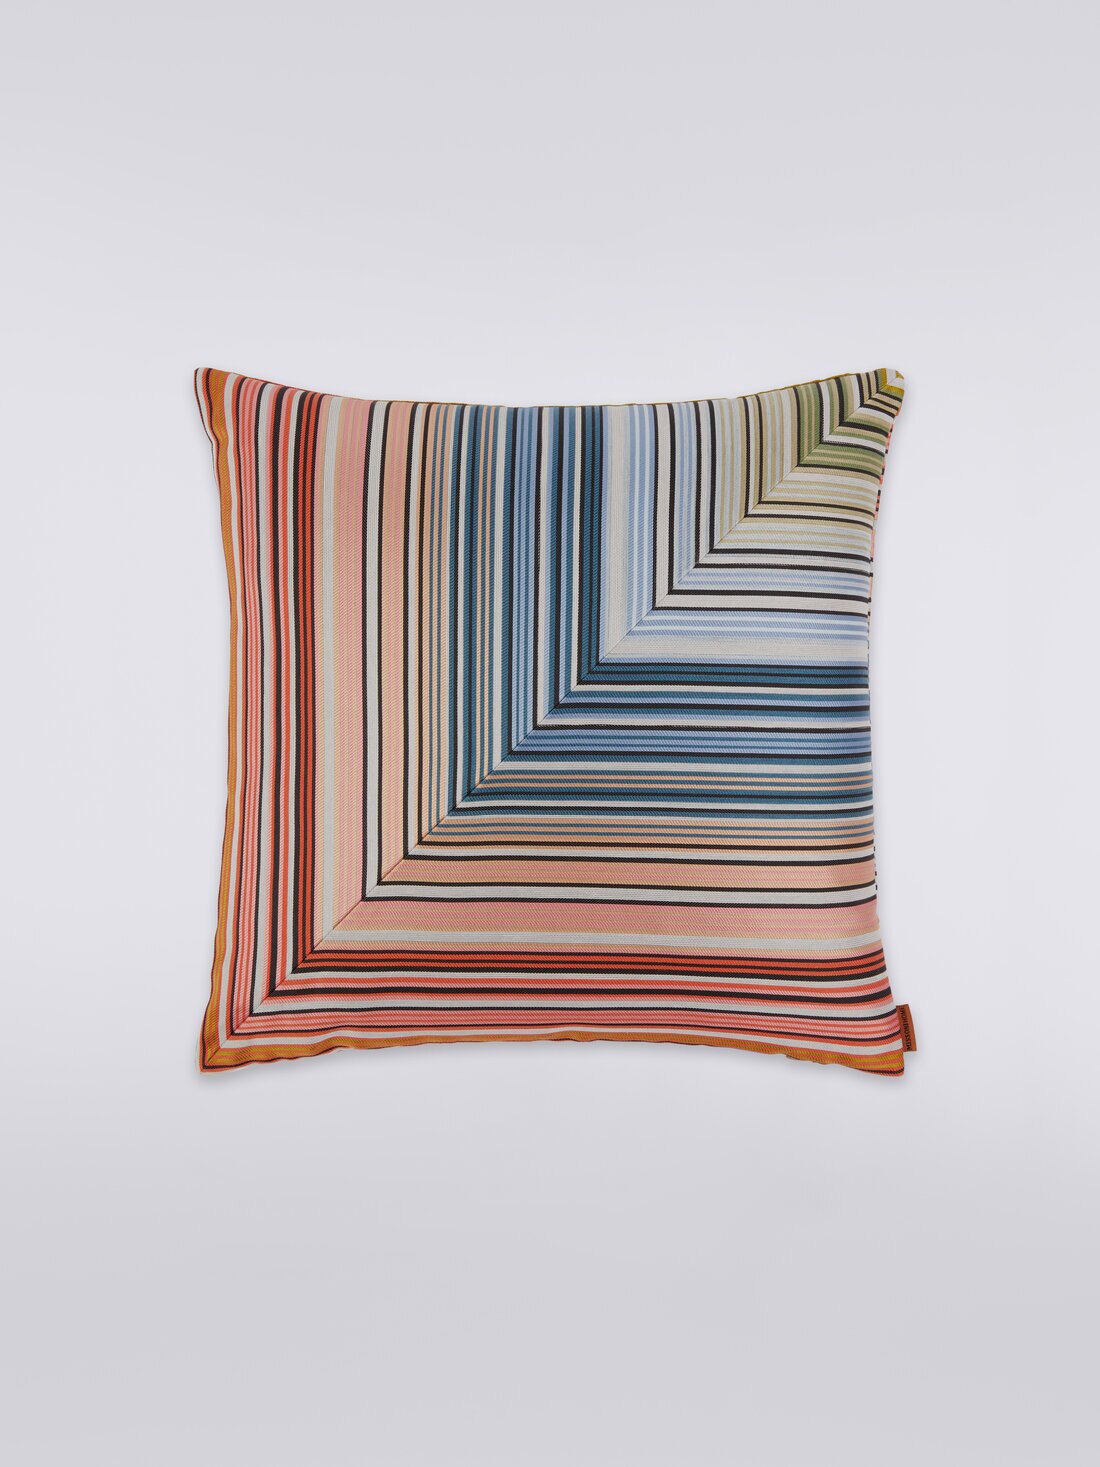 Brighton PW 40x40 cm cushion, Multicoloured  - 8051275581277 - 0